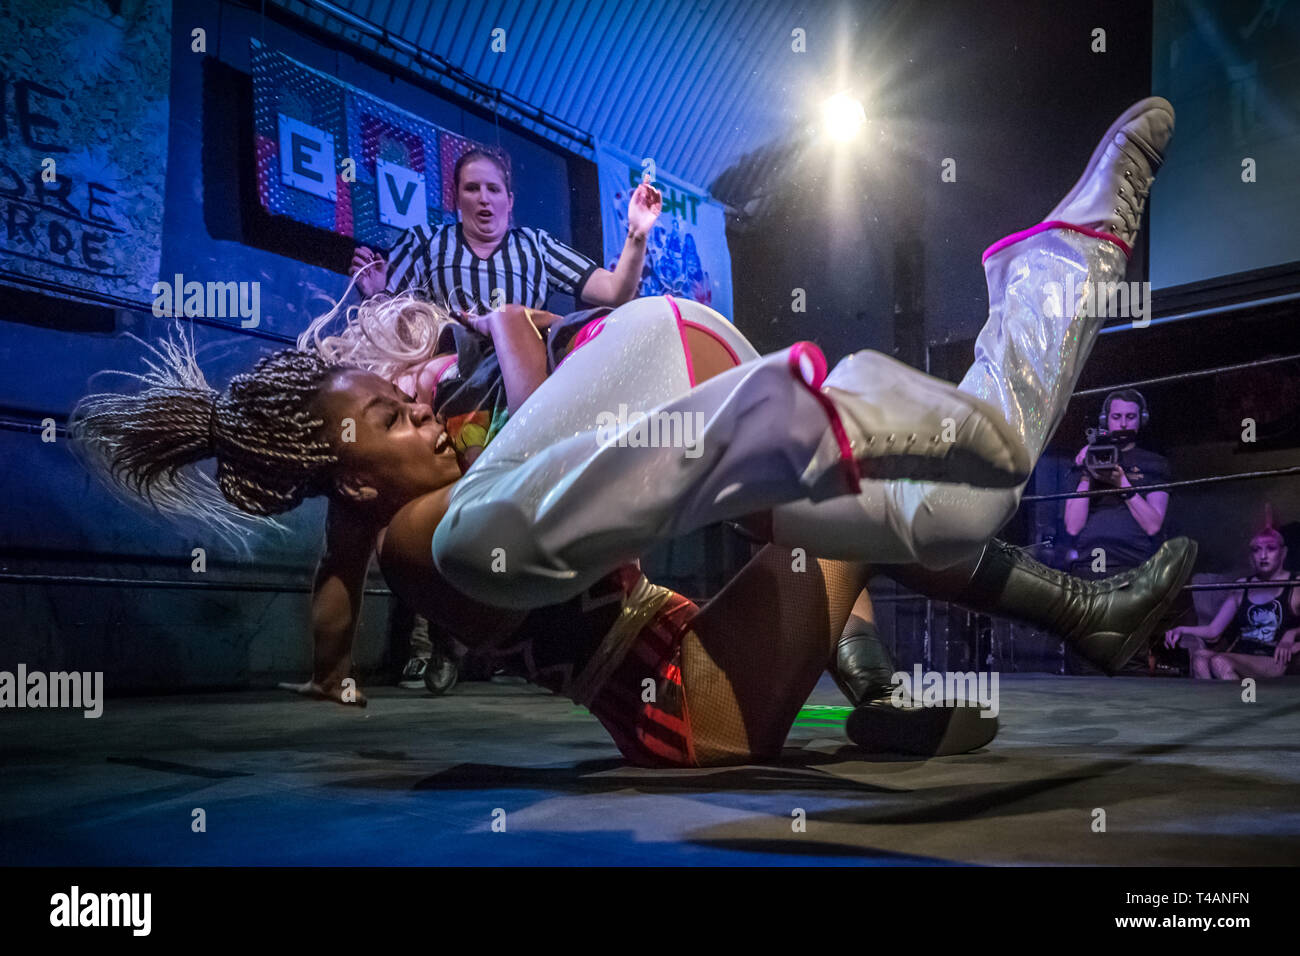 London, UK. 13th April, 2019. Eve Women’s Wrestling “Bigger than SHEsus” professional women’s wrestling event. Credit: Guy Corbishley/Alamy Live News Stock Photo